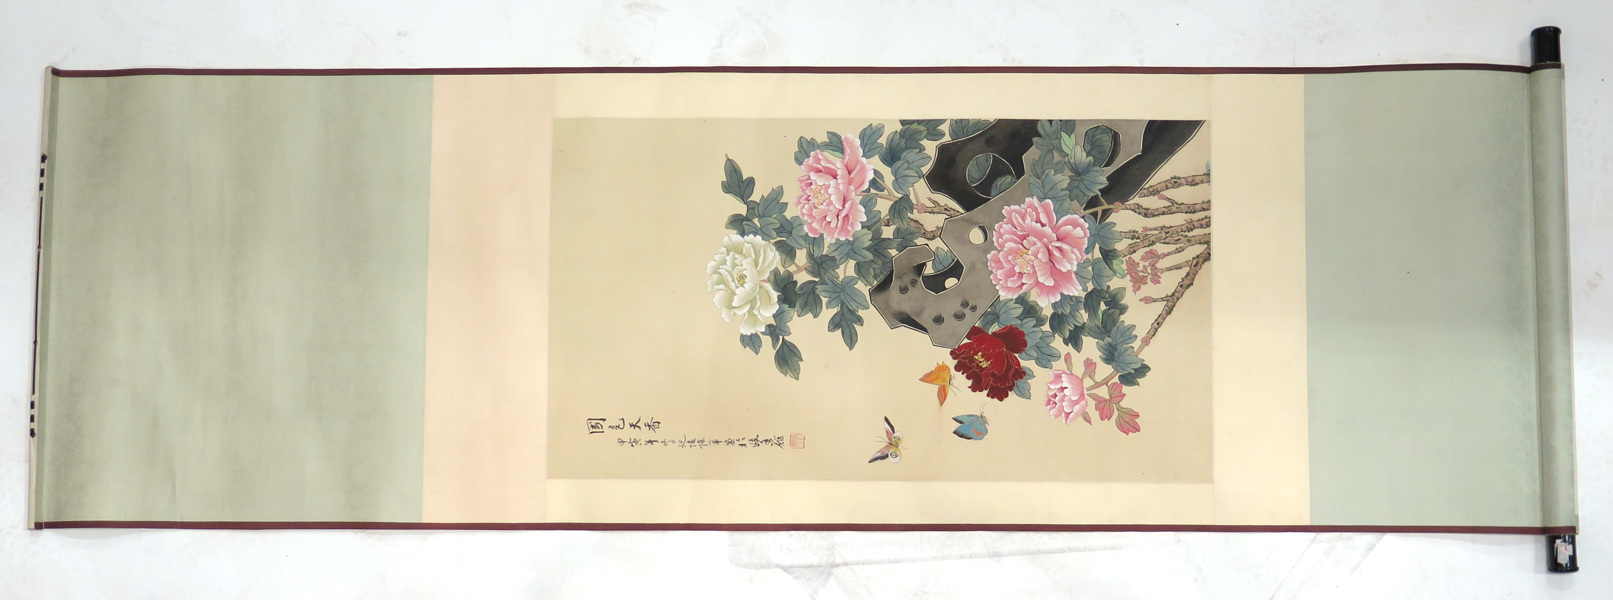 Bildrulle, gouache på papper, Kina, 1900-tal, _18552a_lg.jpeg